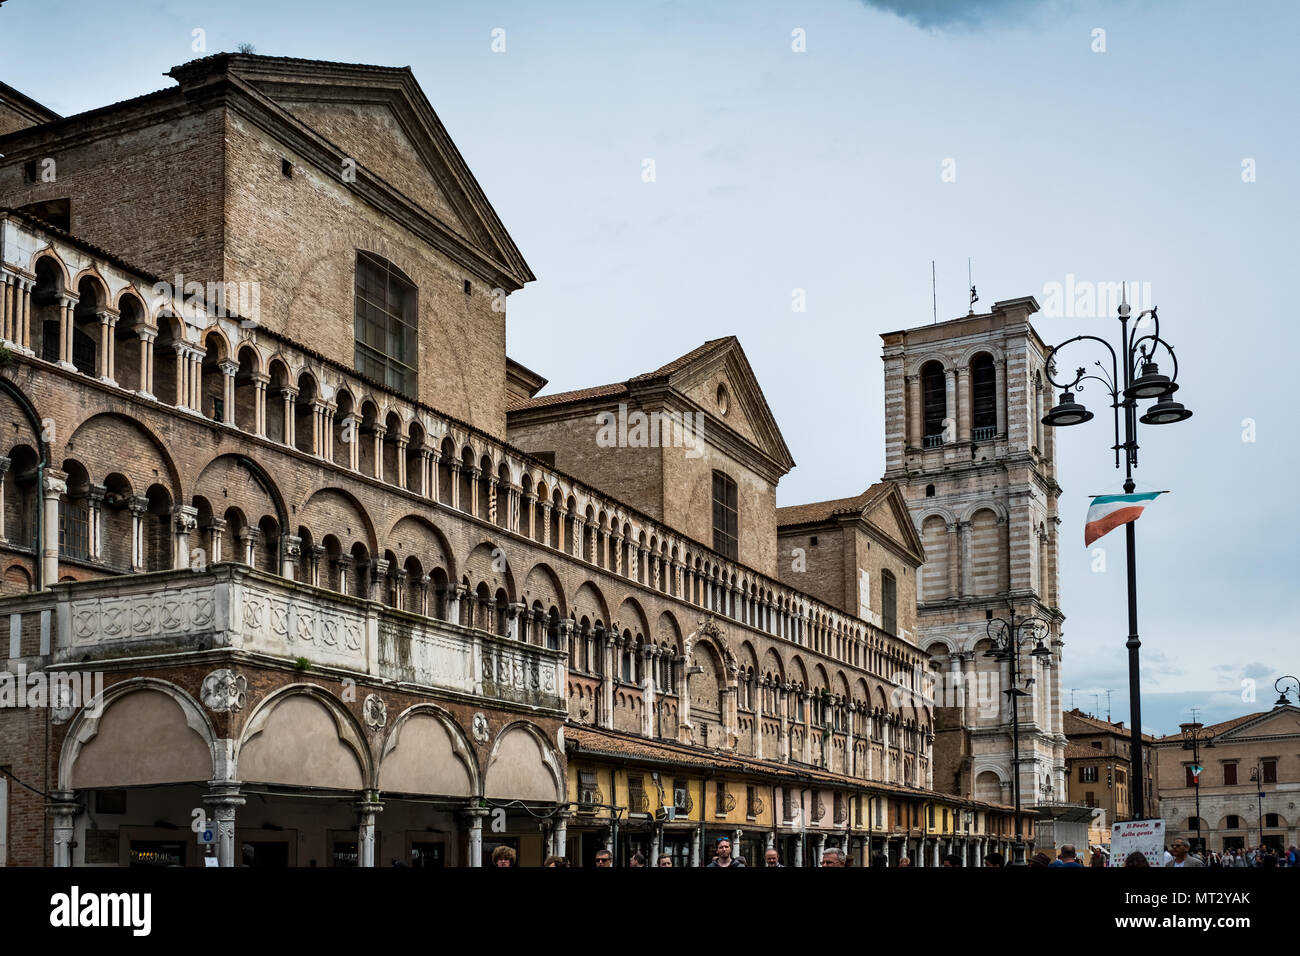 FERRARA, ITALY - Trieste and Trento square with Cathedral of Saint George, Ferrara, Emilia-Romagna, Italy Stock Photo